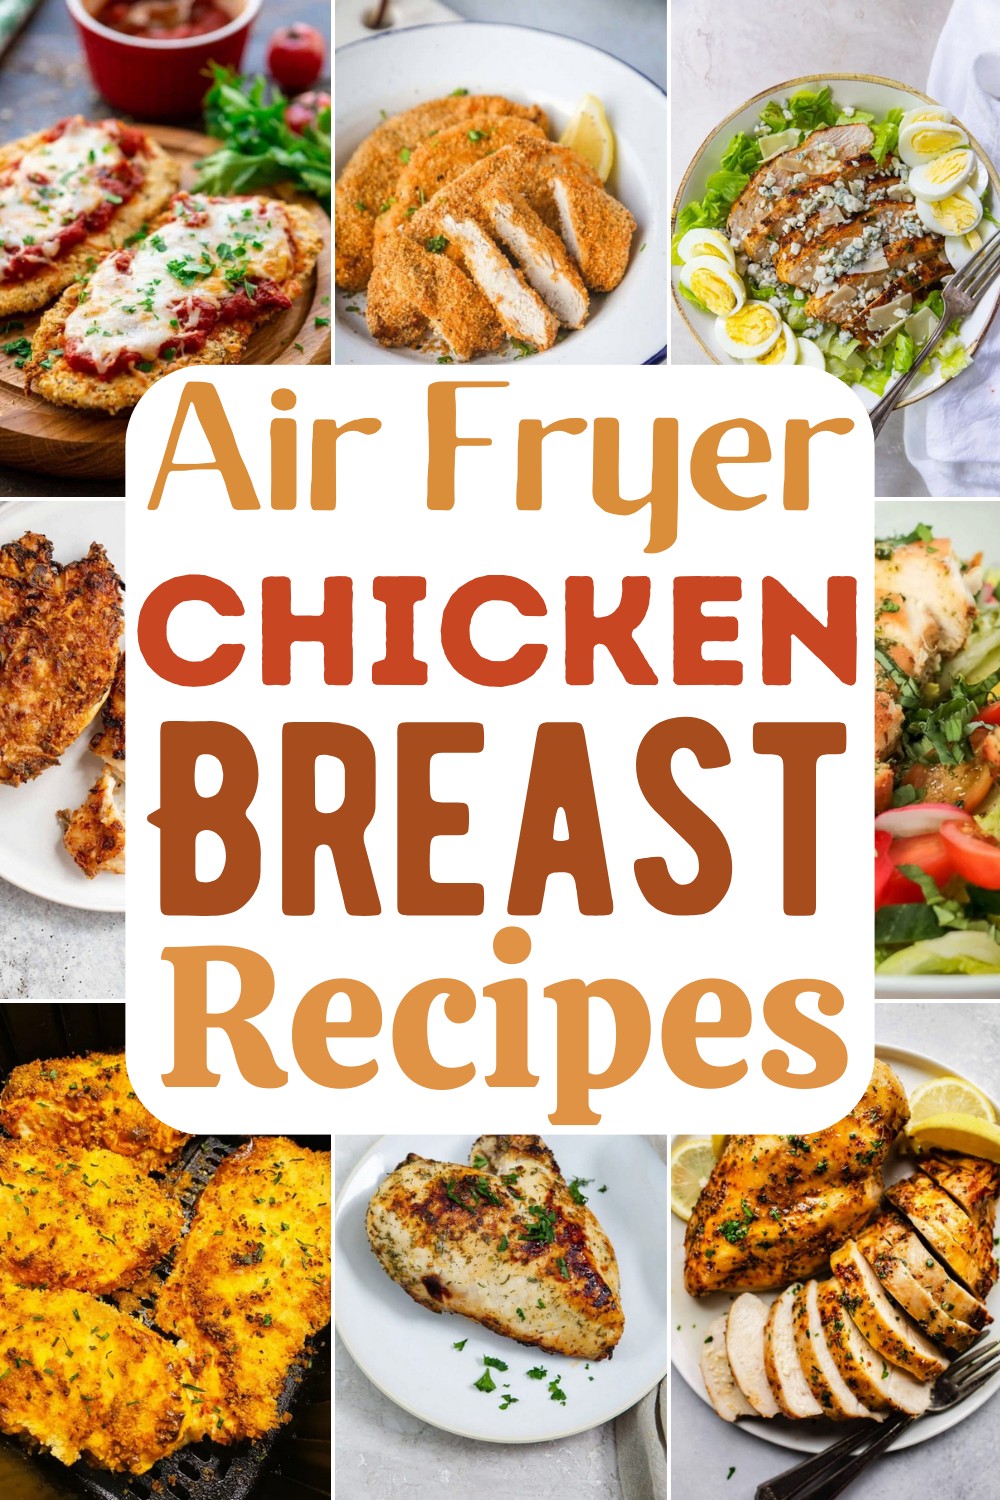 10 Easy Air Fryer Chicken Breast Recipes